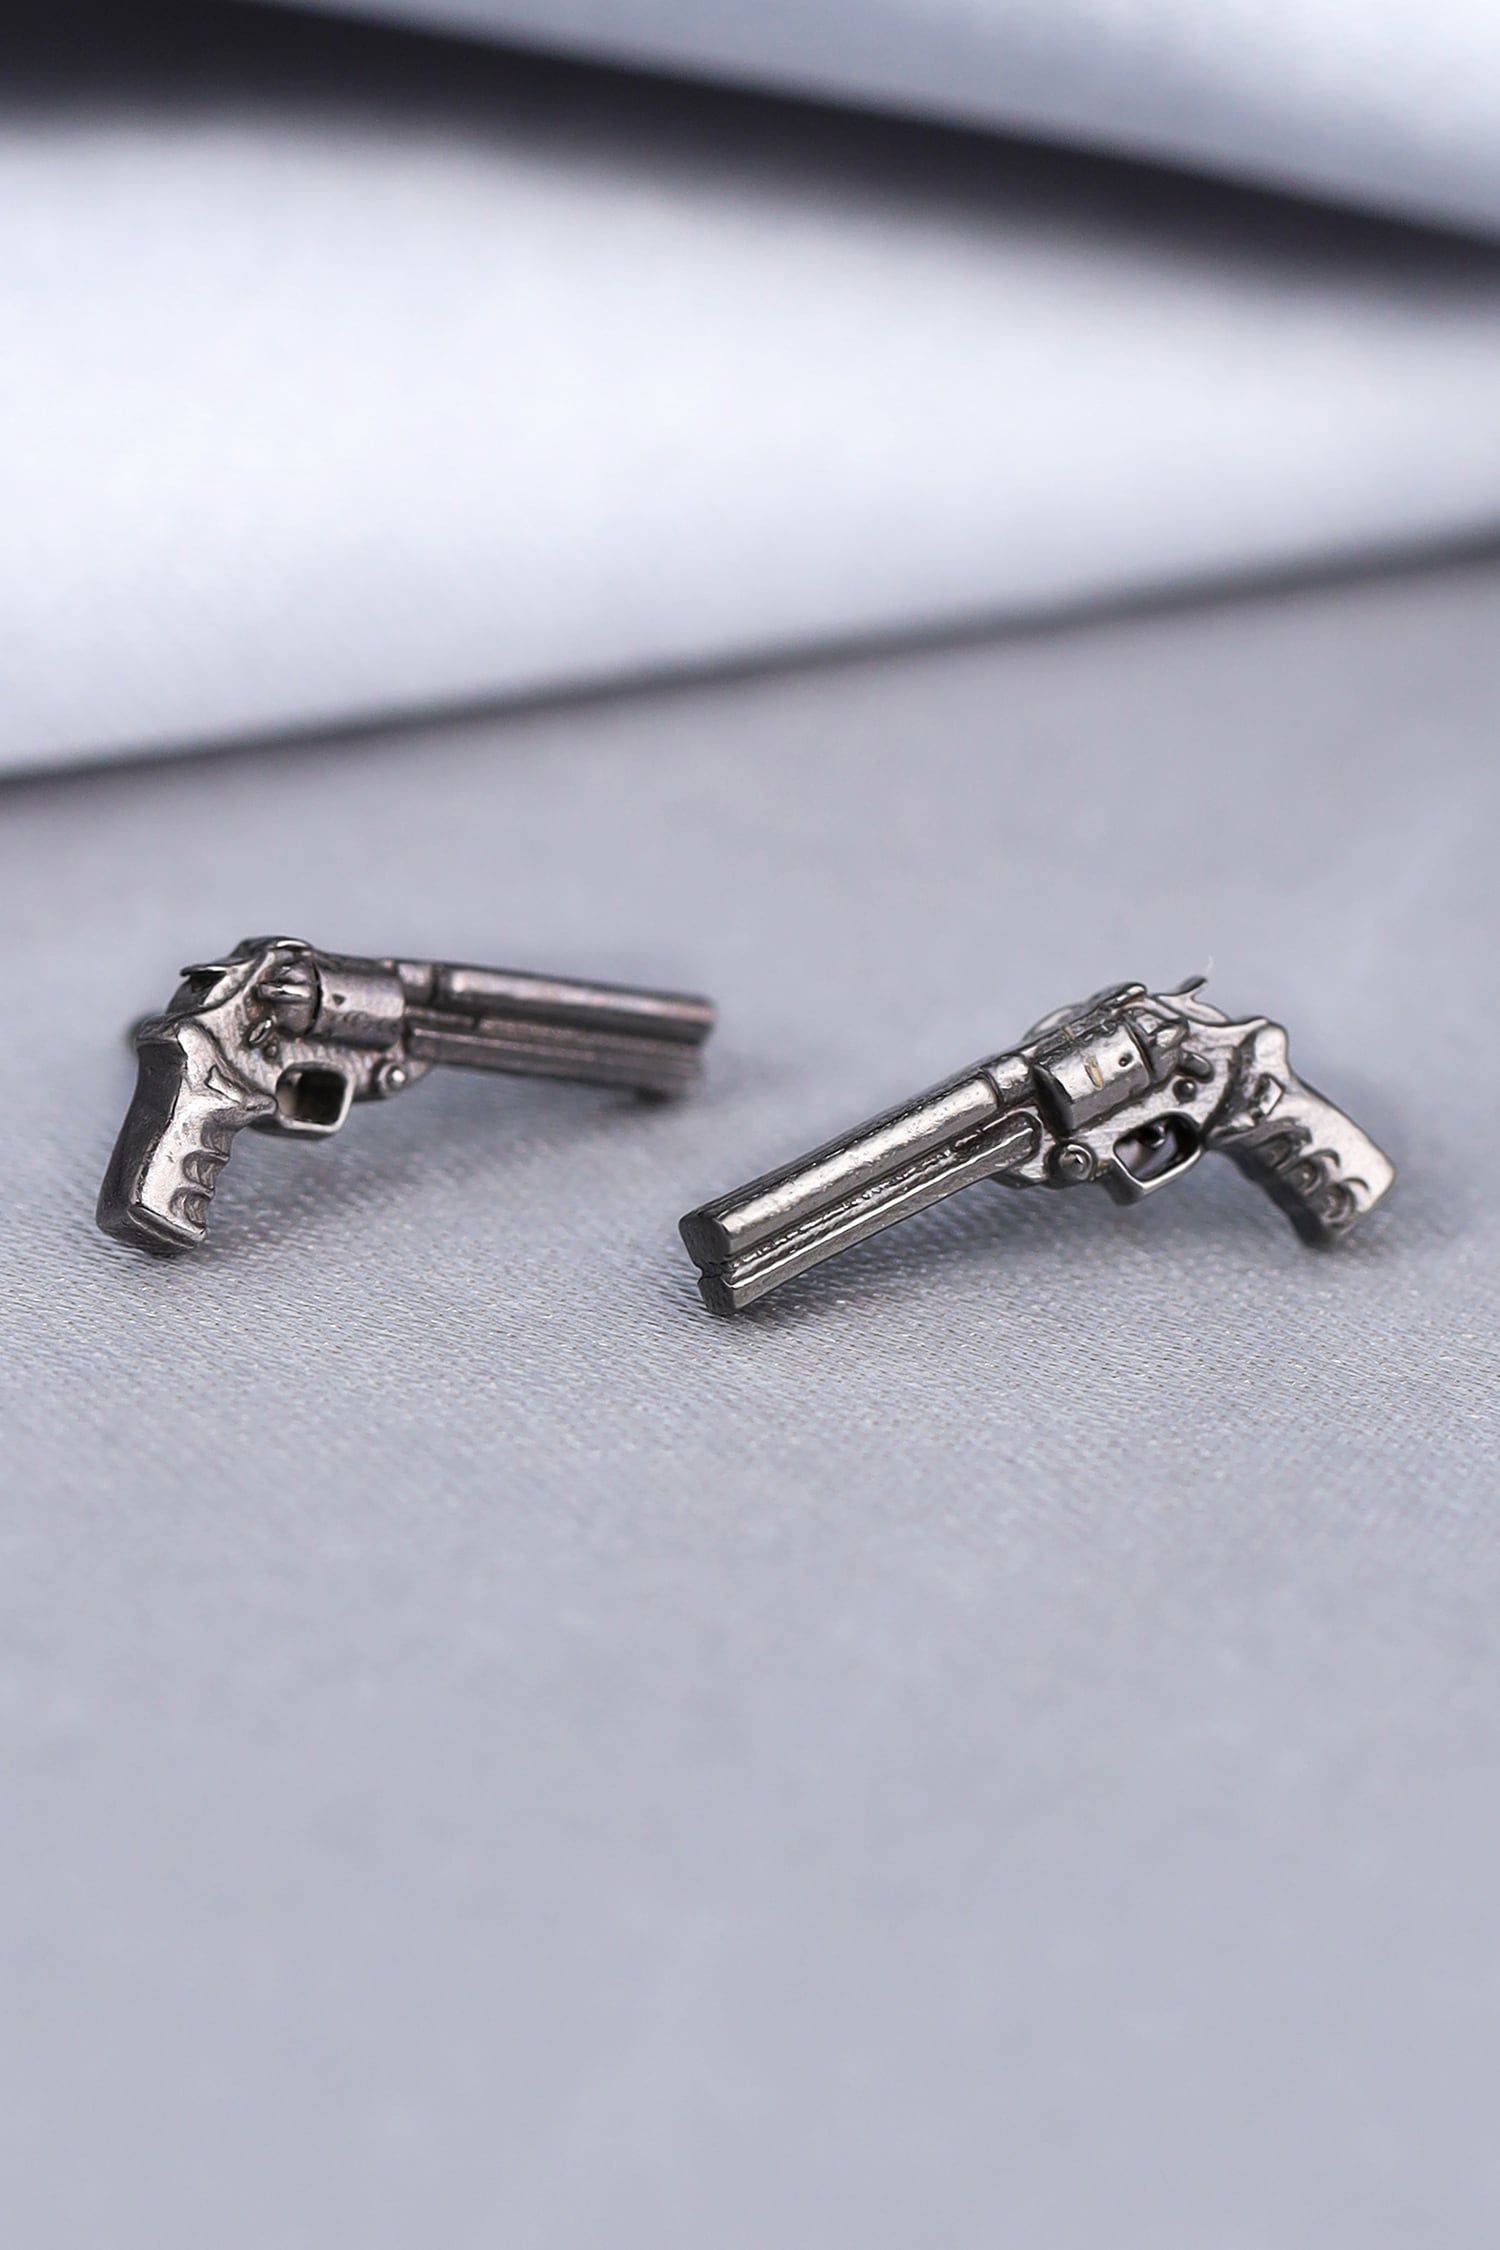 Cosa Nostraa Black Power Gun Carved Collar Tips